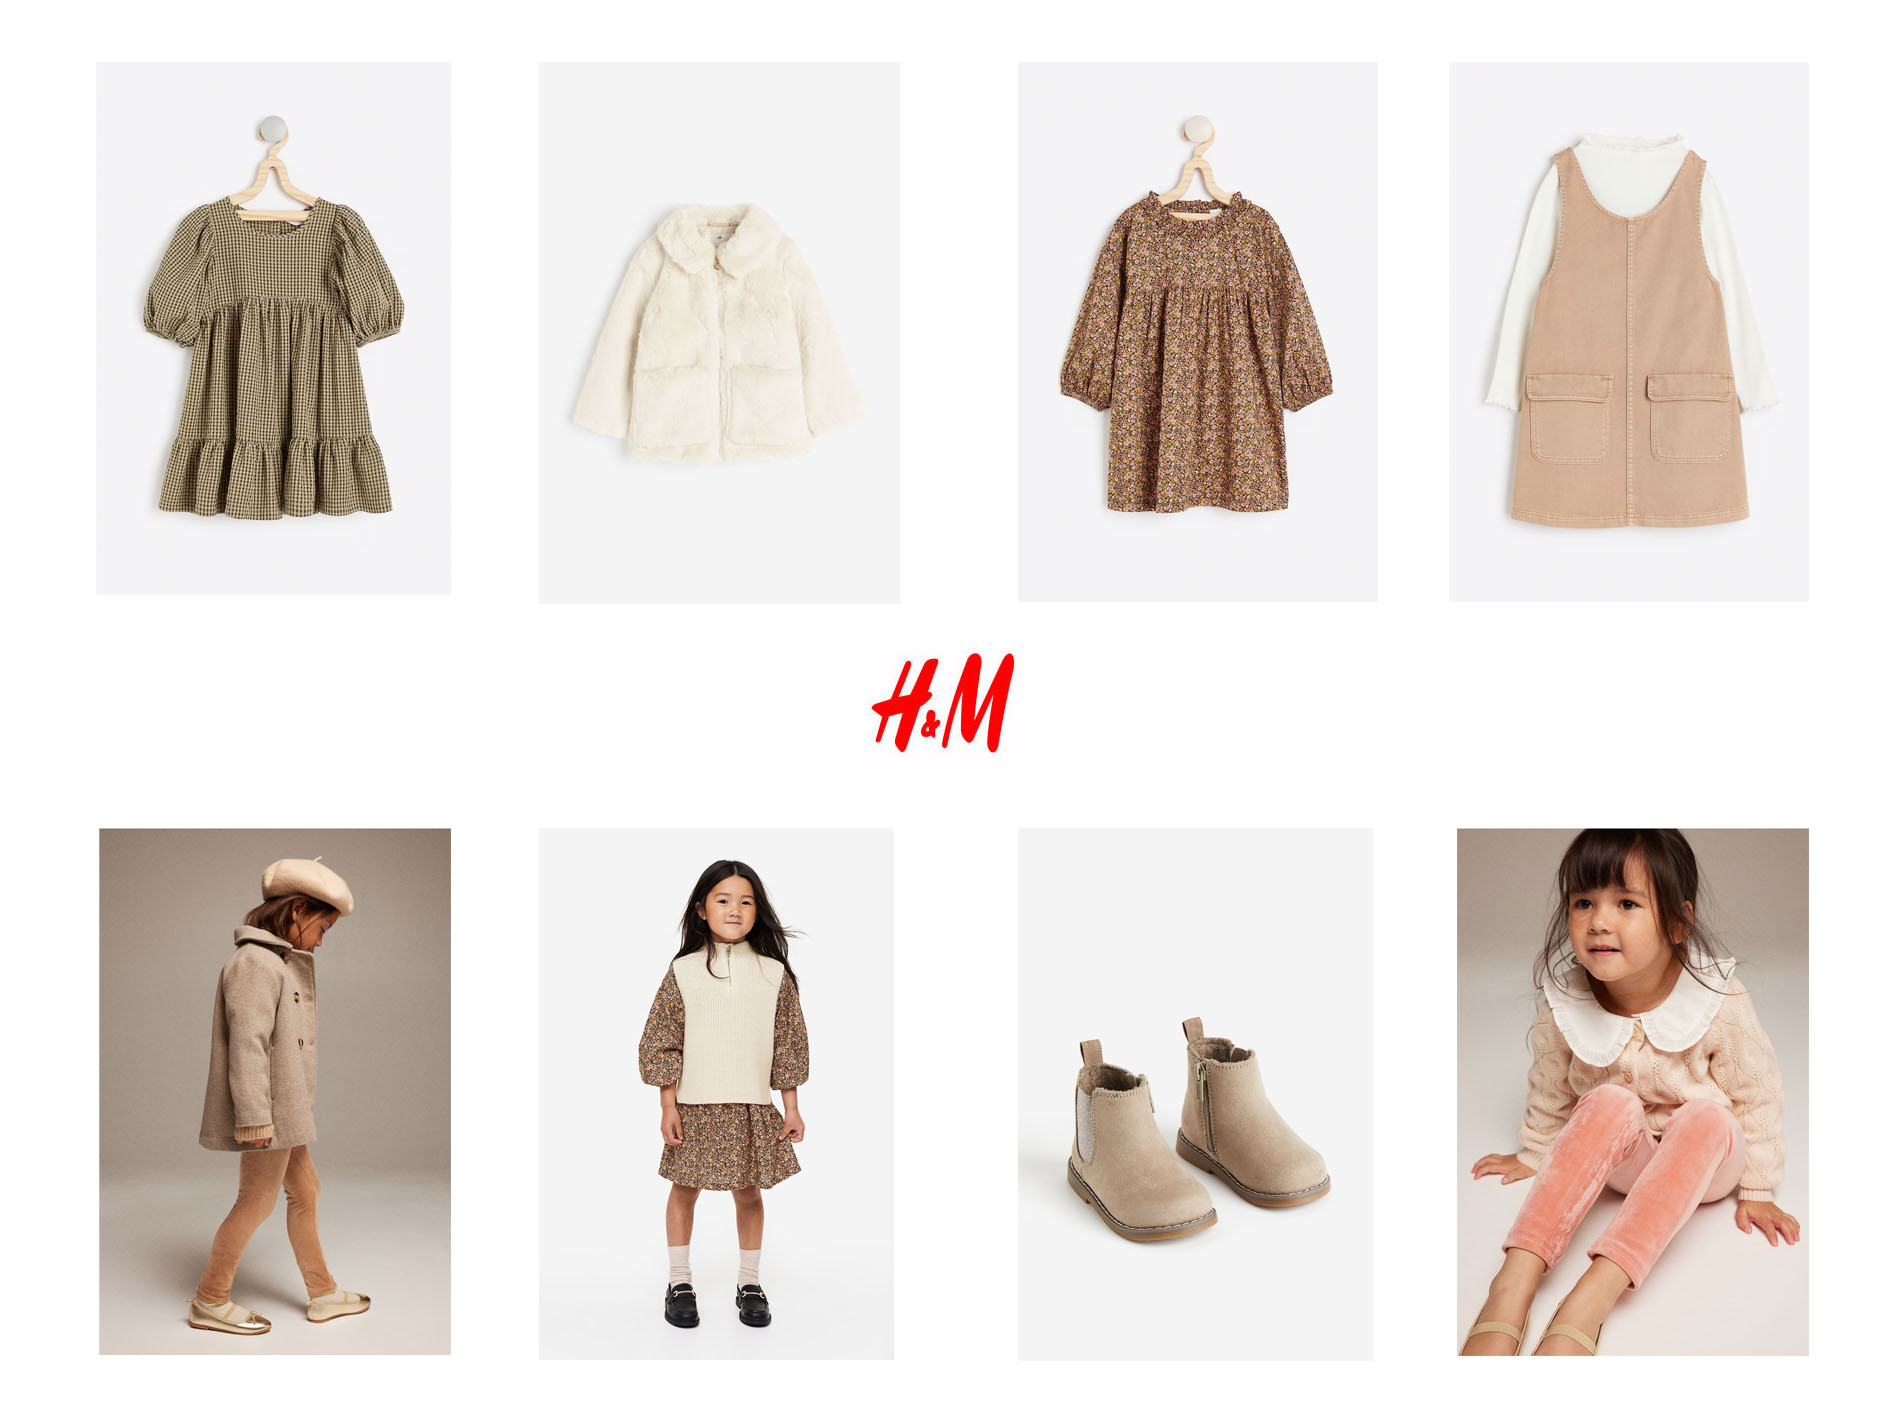 H&M girls autumn clothing collage